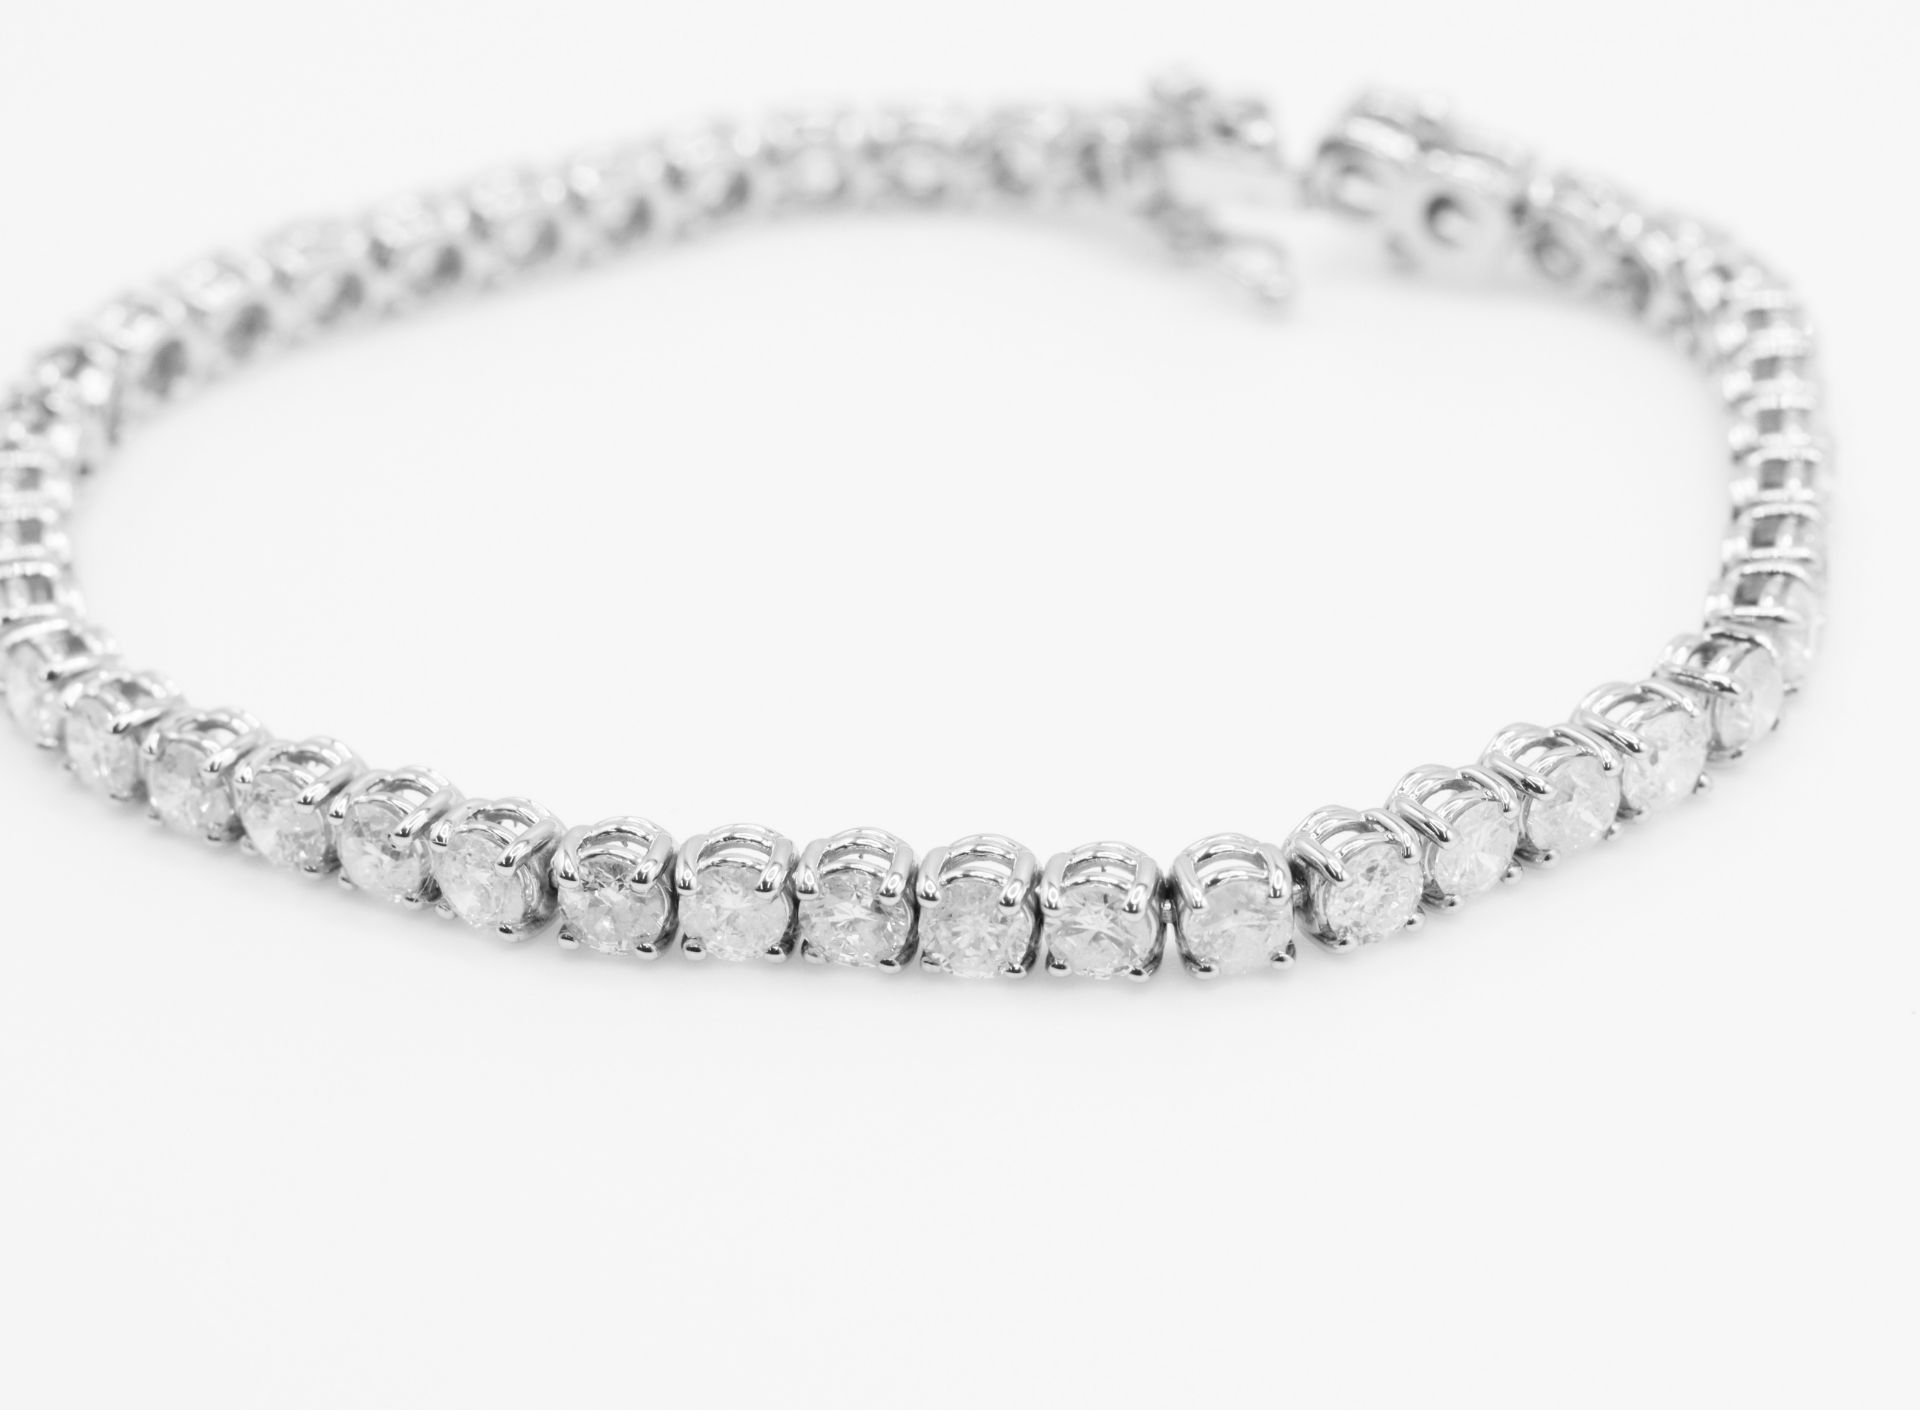 9.0 Carat 18ct White Gold Tennis Bracelet set with Round Brilliant Cut Natural Diamonds - Image 4 of 17